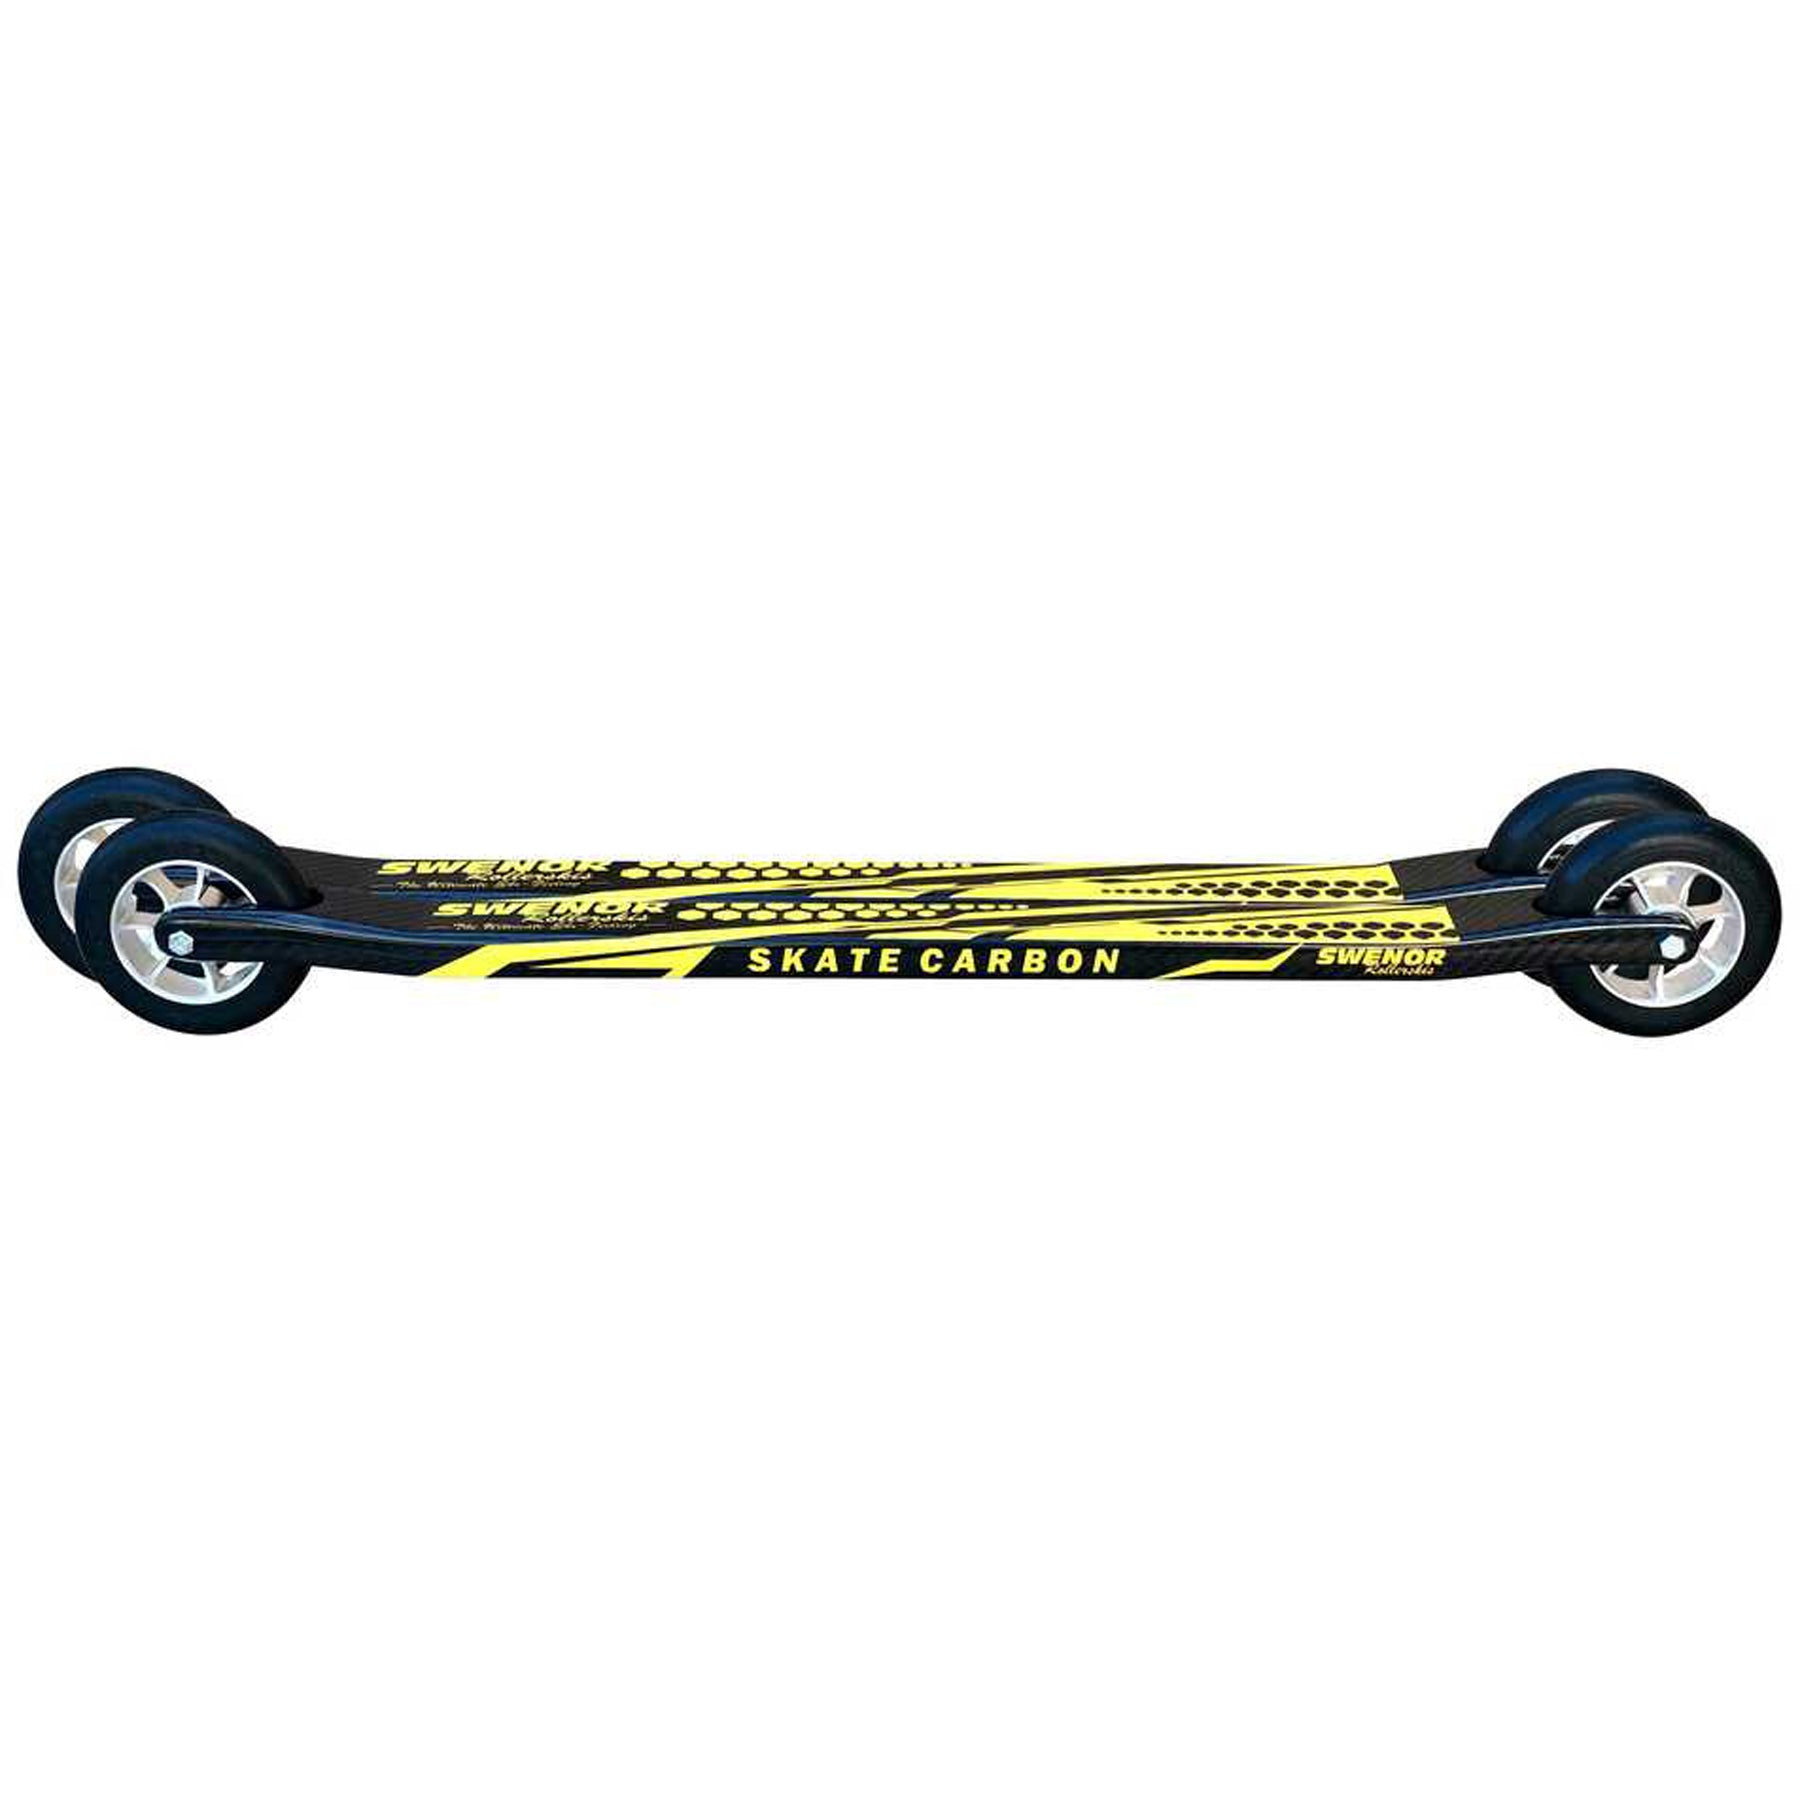 Swenor Rollerski Skate Carbon Premounted 65-500